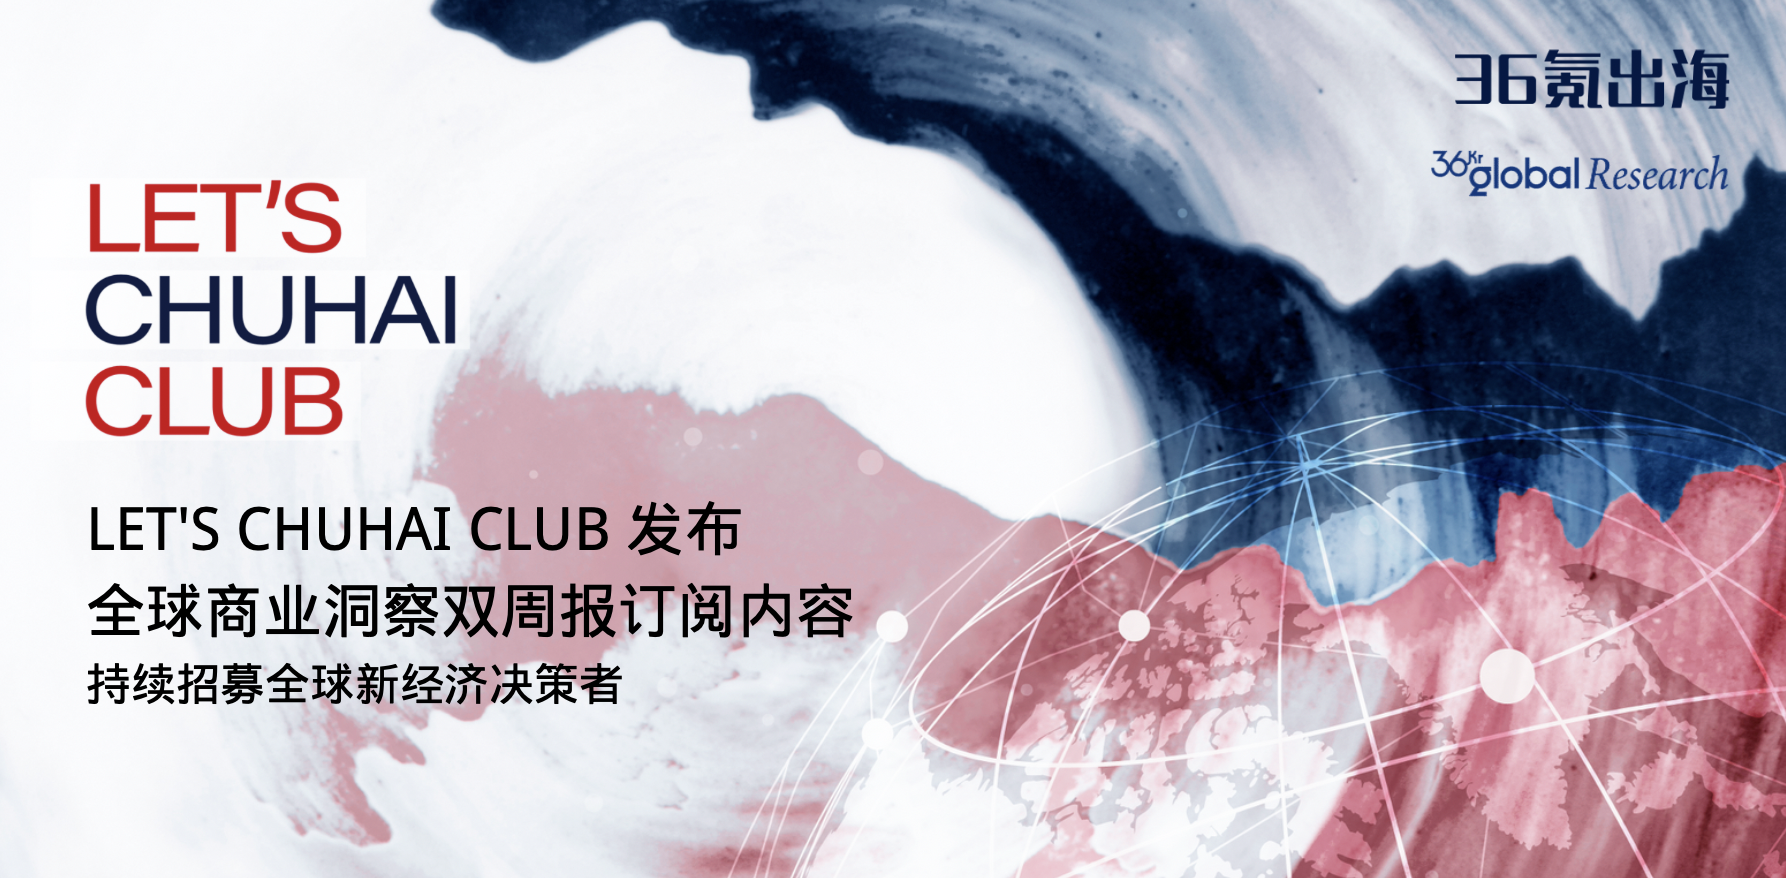 LET’S CHUHAI CLUB 发布《全球商业洞察双周报 Vol.6》订阅内容｜持续招募全球新经济决策者